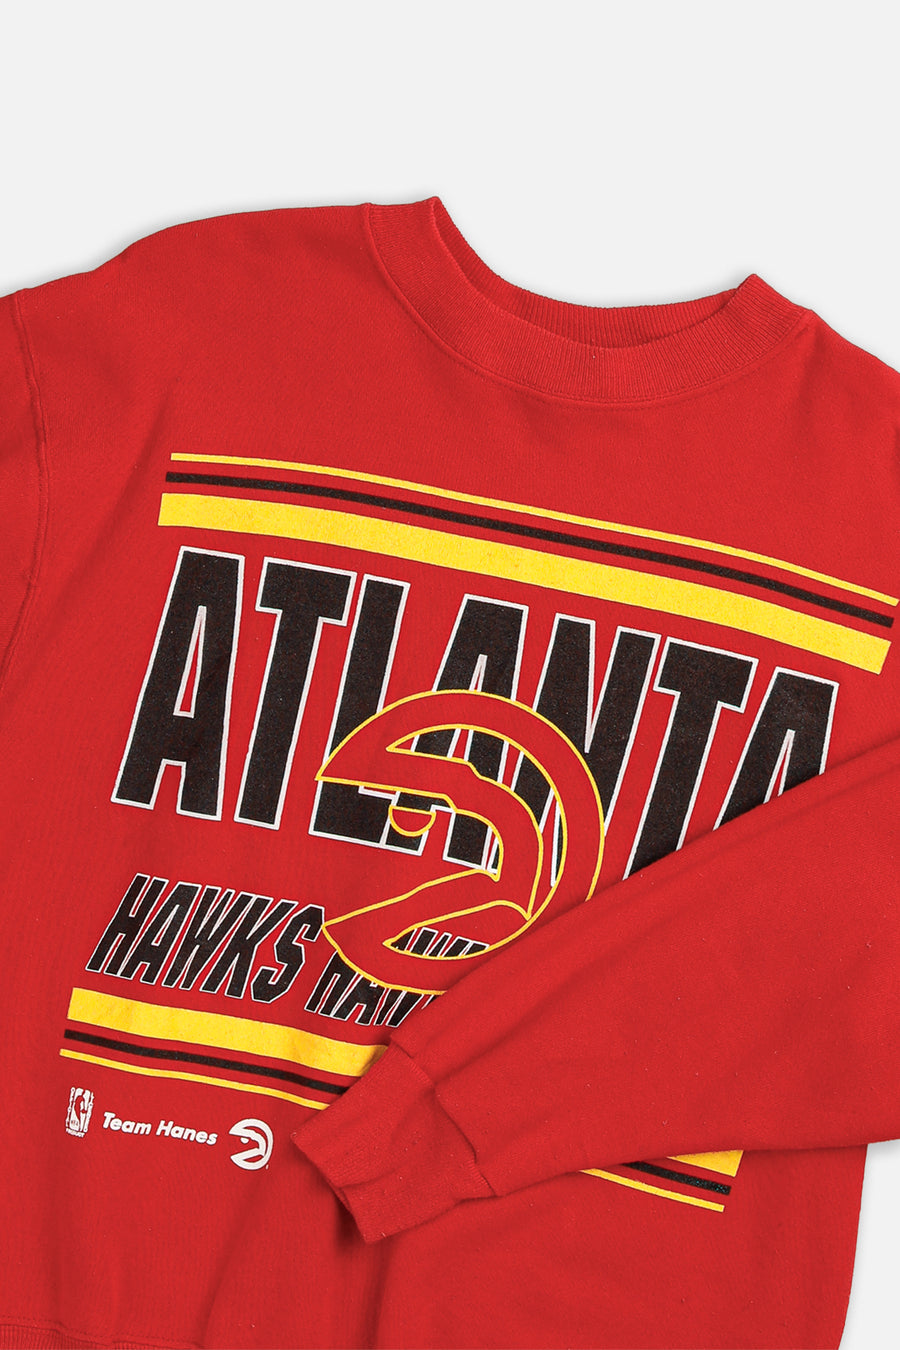 Vintage Atlanta Falcons Sweatshirt - M